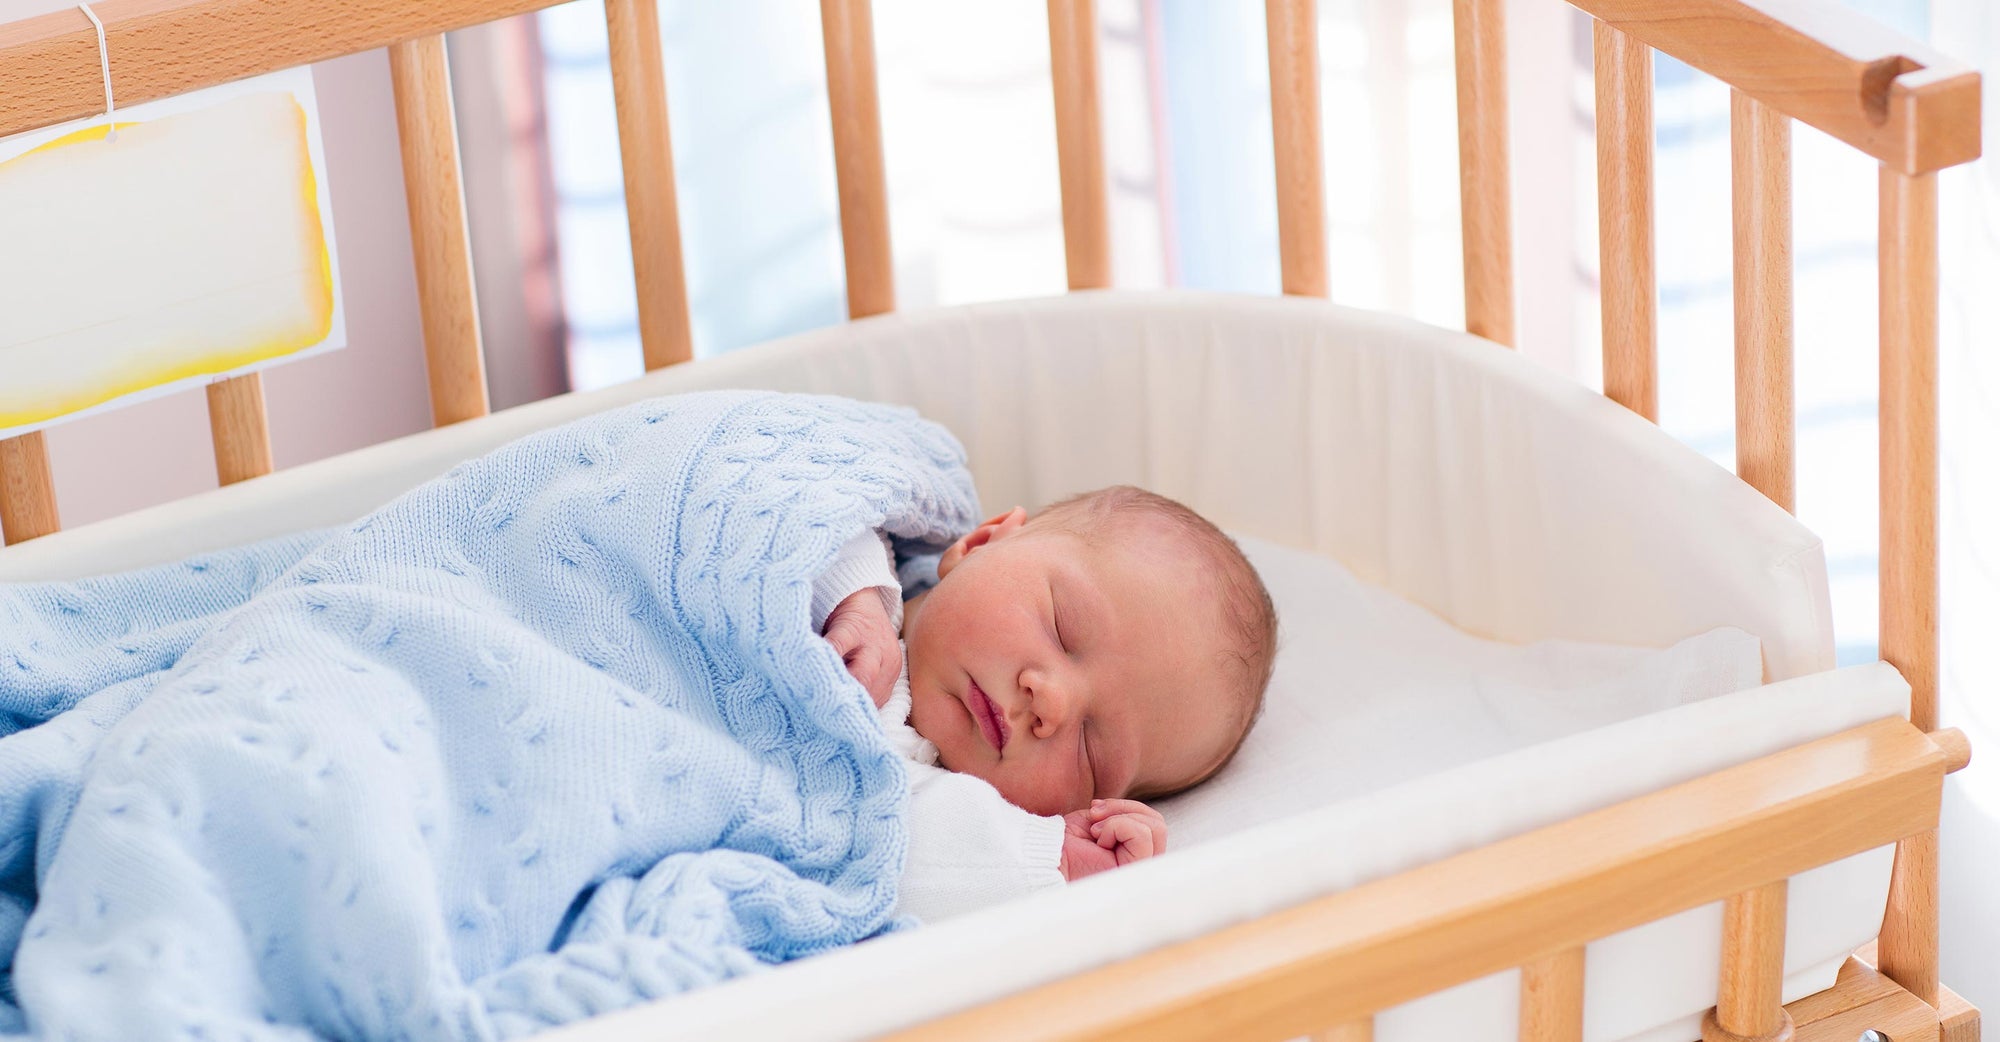 A baby sleeping in a crib.